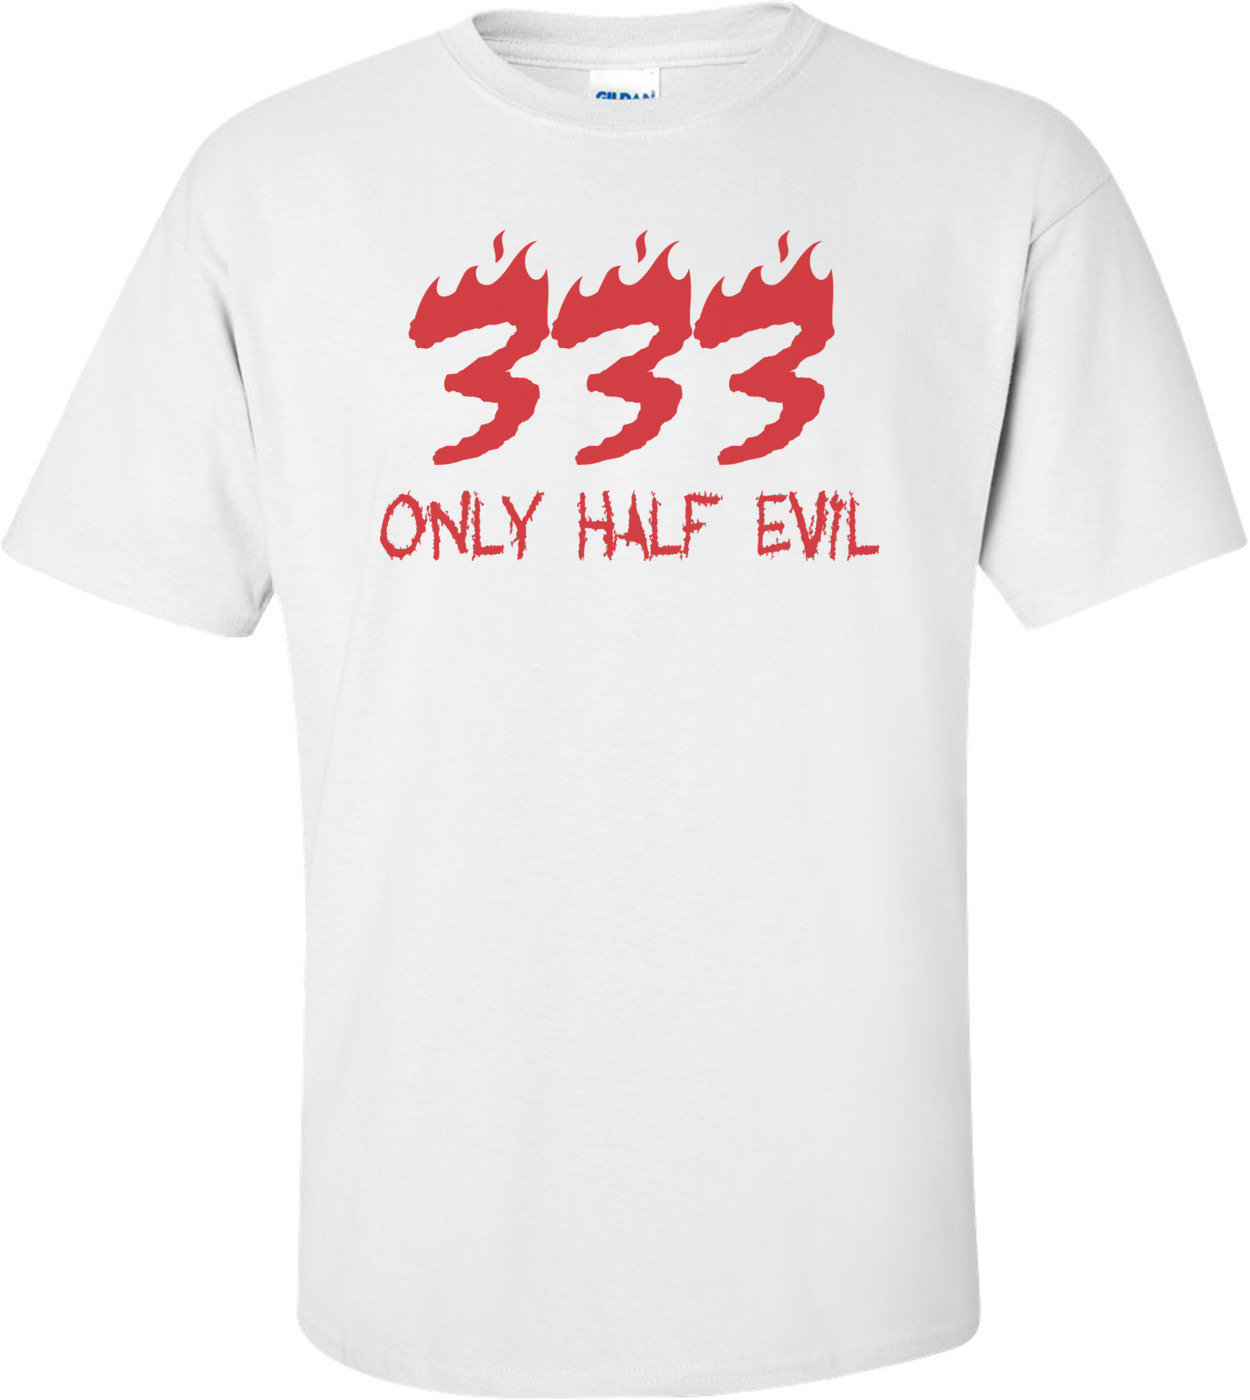 333 Only Half Evil T-shirt